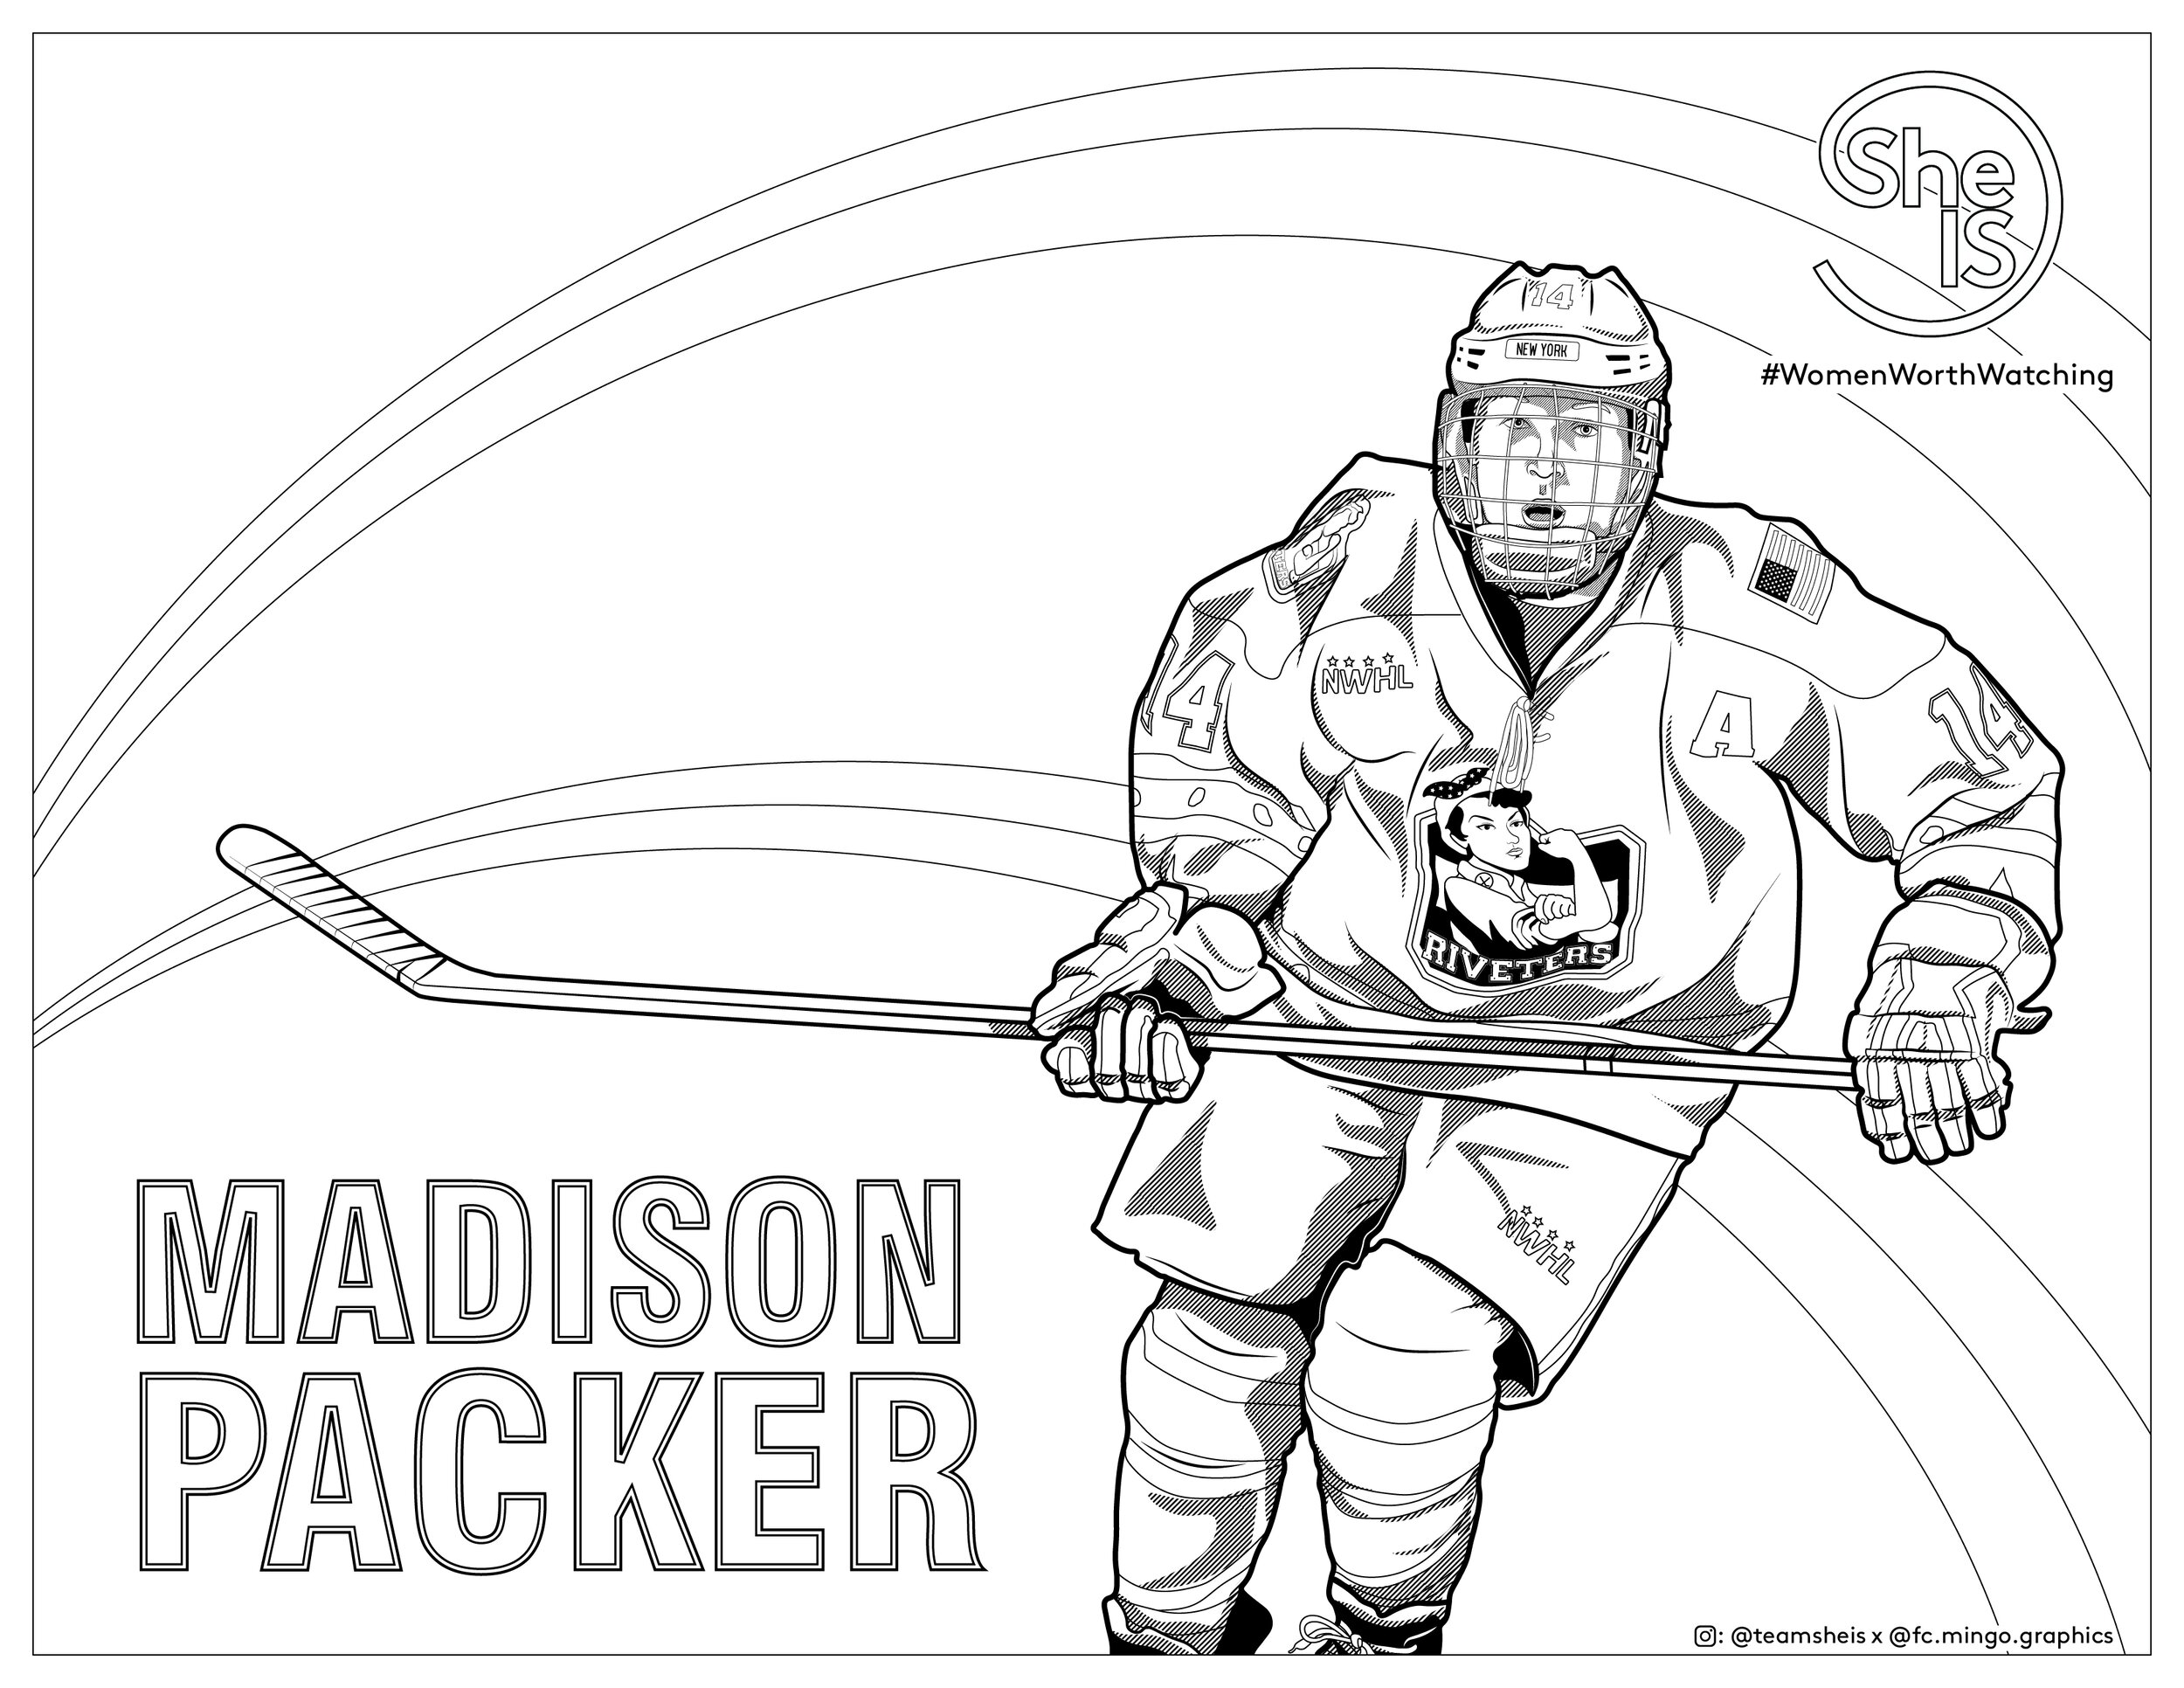 Madison Packer